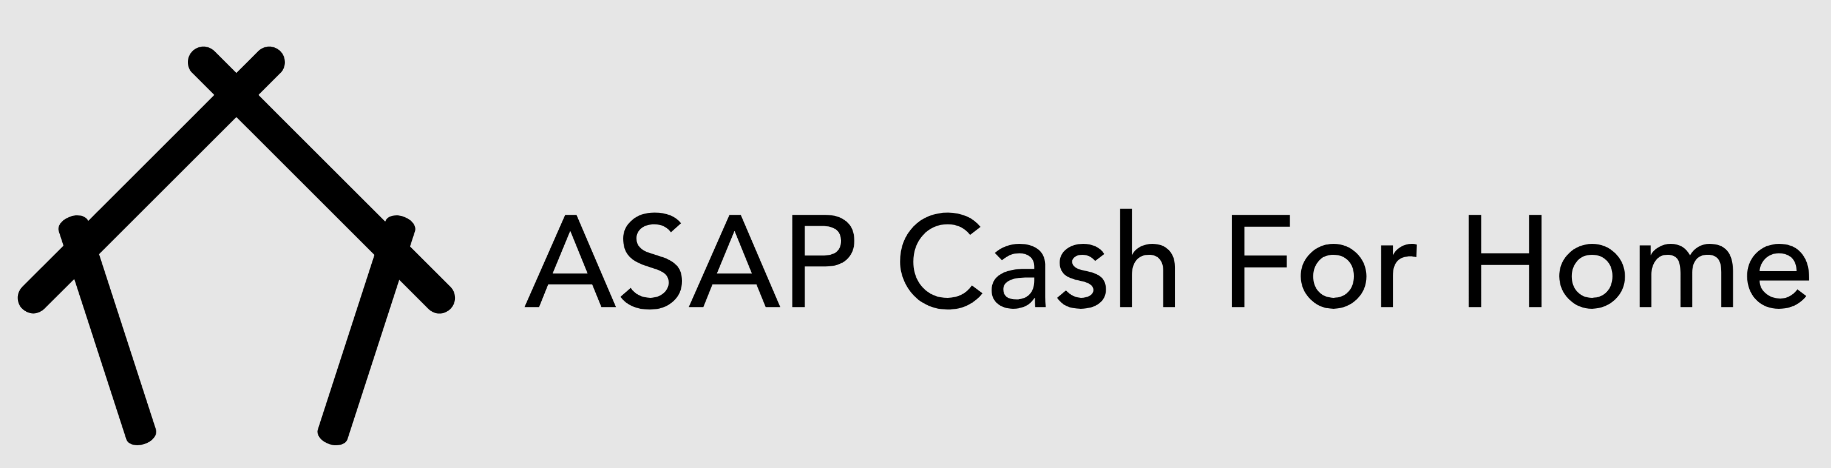 ASAP CASH FOR HOME Logo